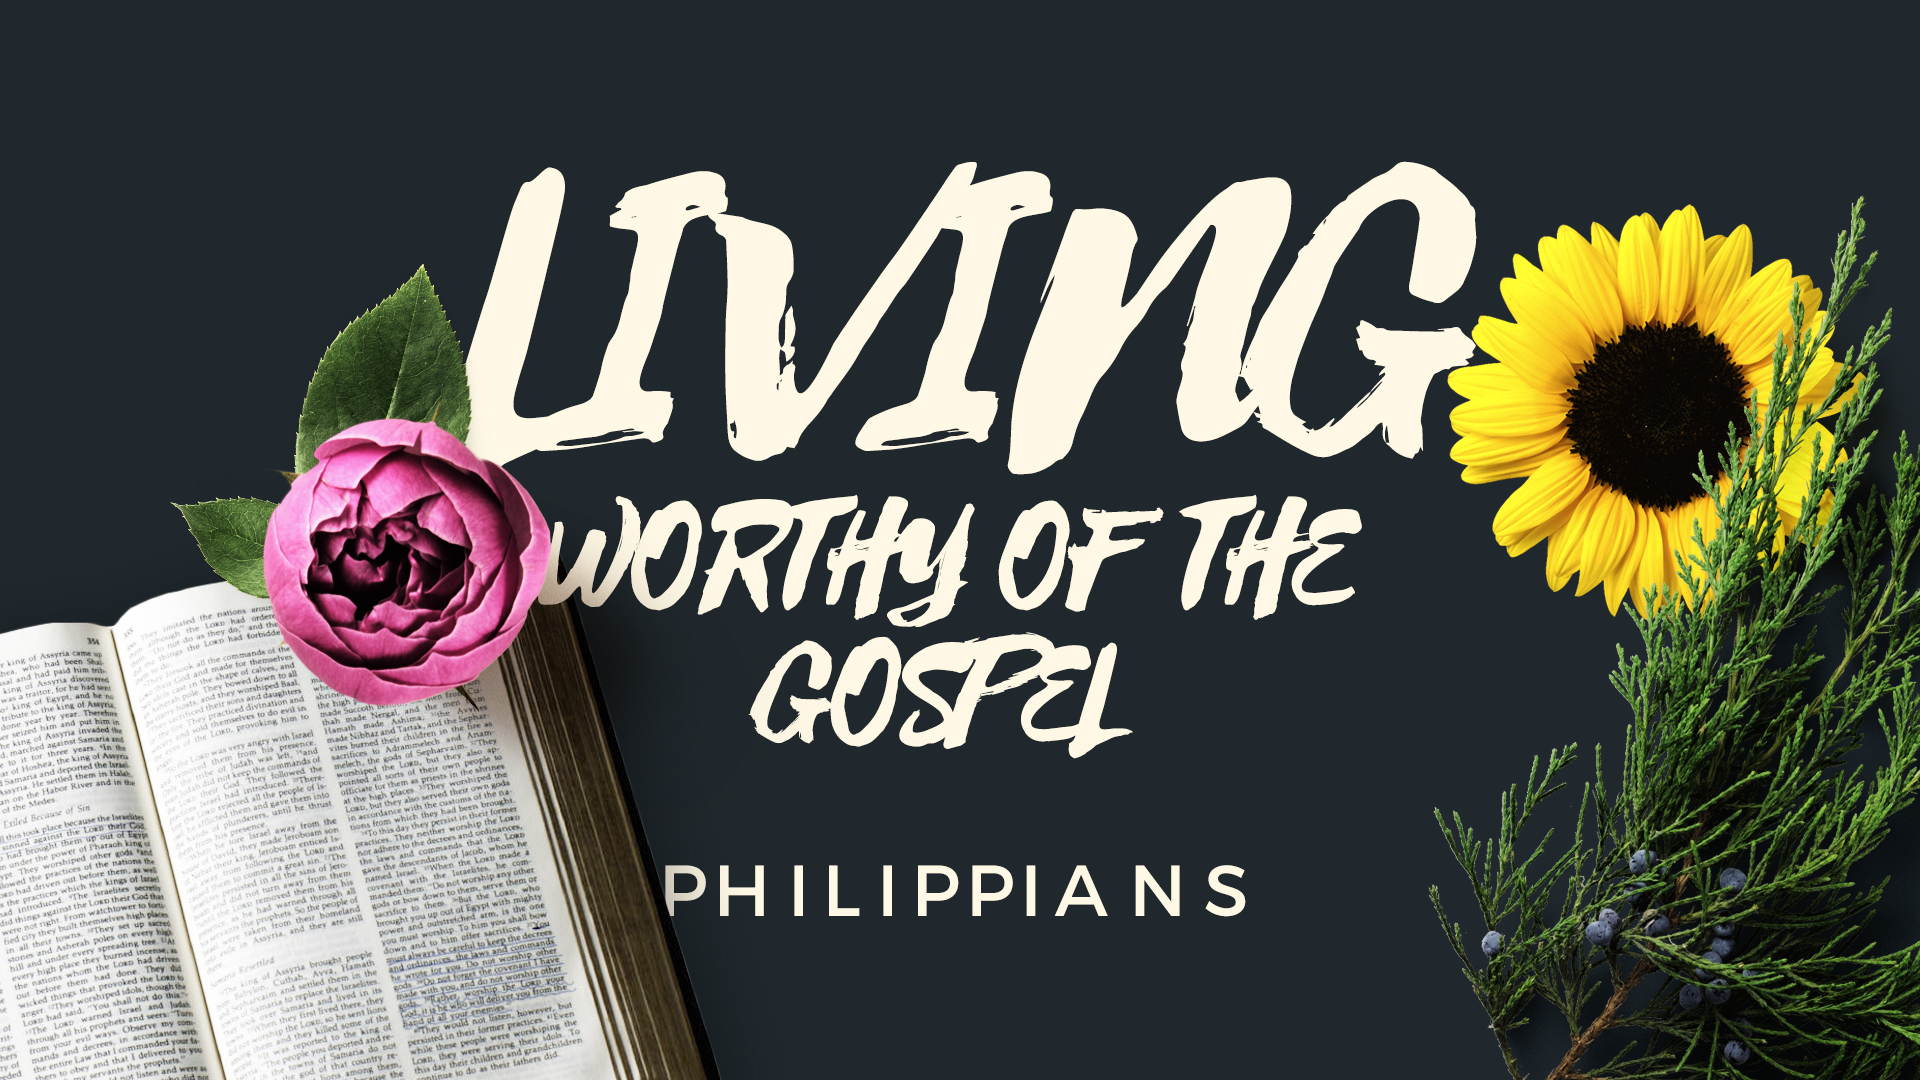 Living worthy of the gospel: Philippians